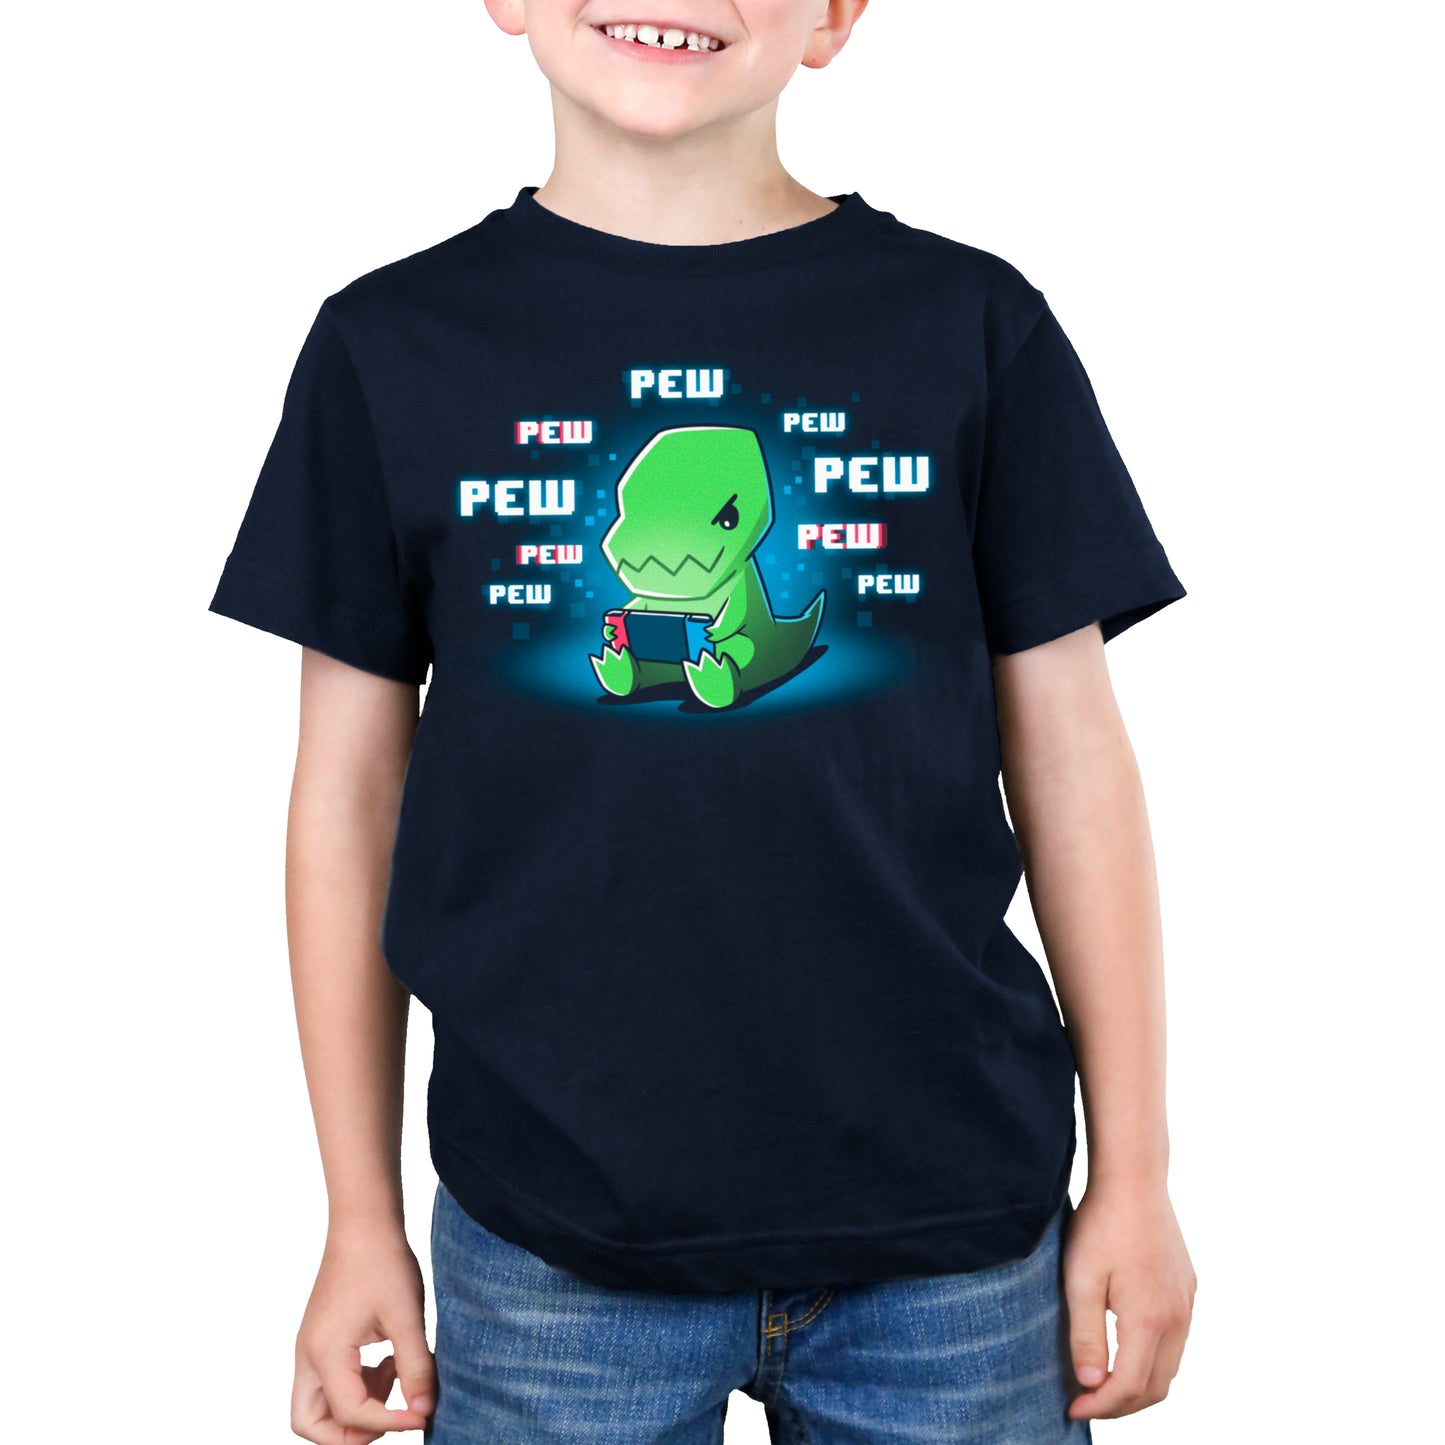 A young boy wearing a TeeTurtle Pew Pew Dinosaur t-shirt.